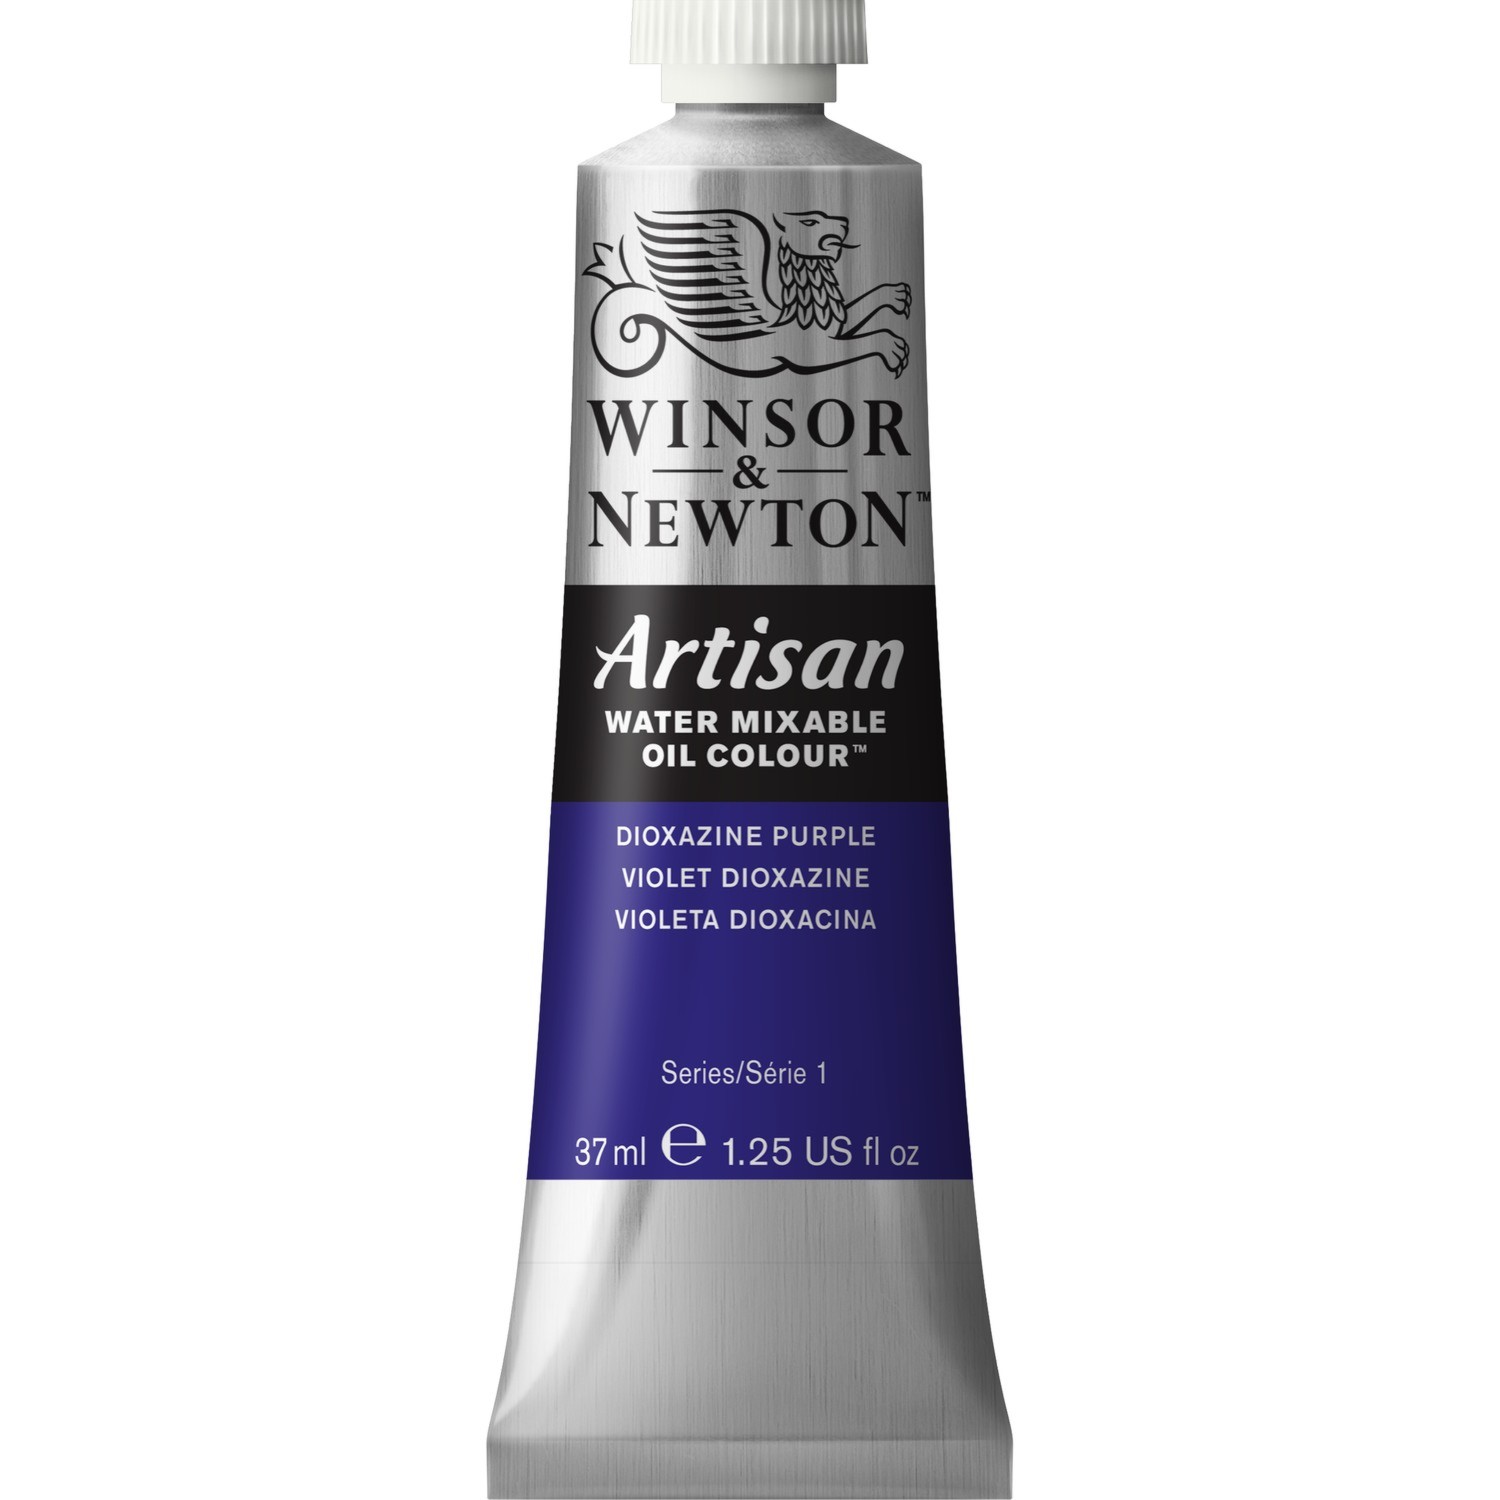 Winsor and Newton 37ml Artisan Mixable Oil Paint - Dioxazine Purple Image 1